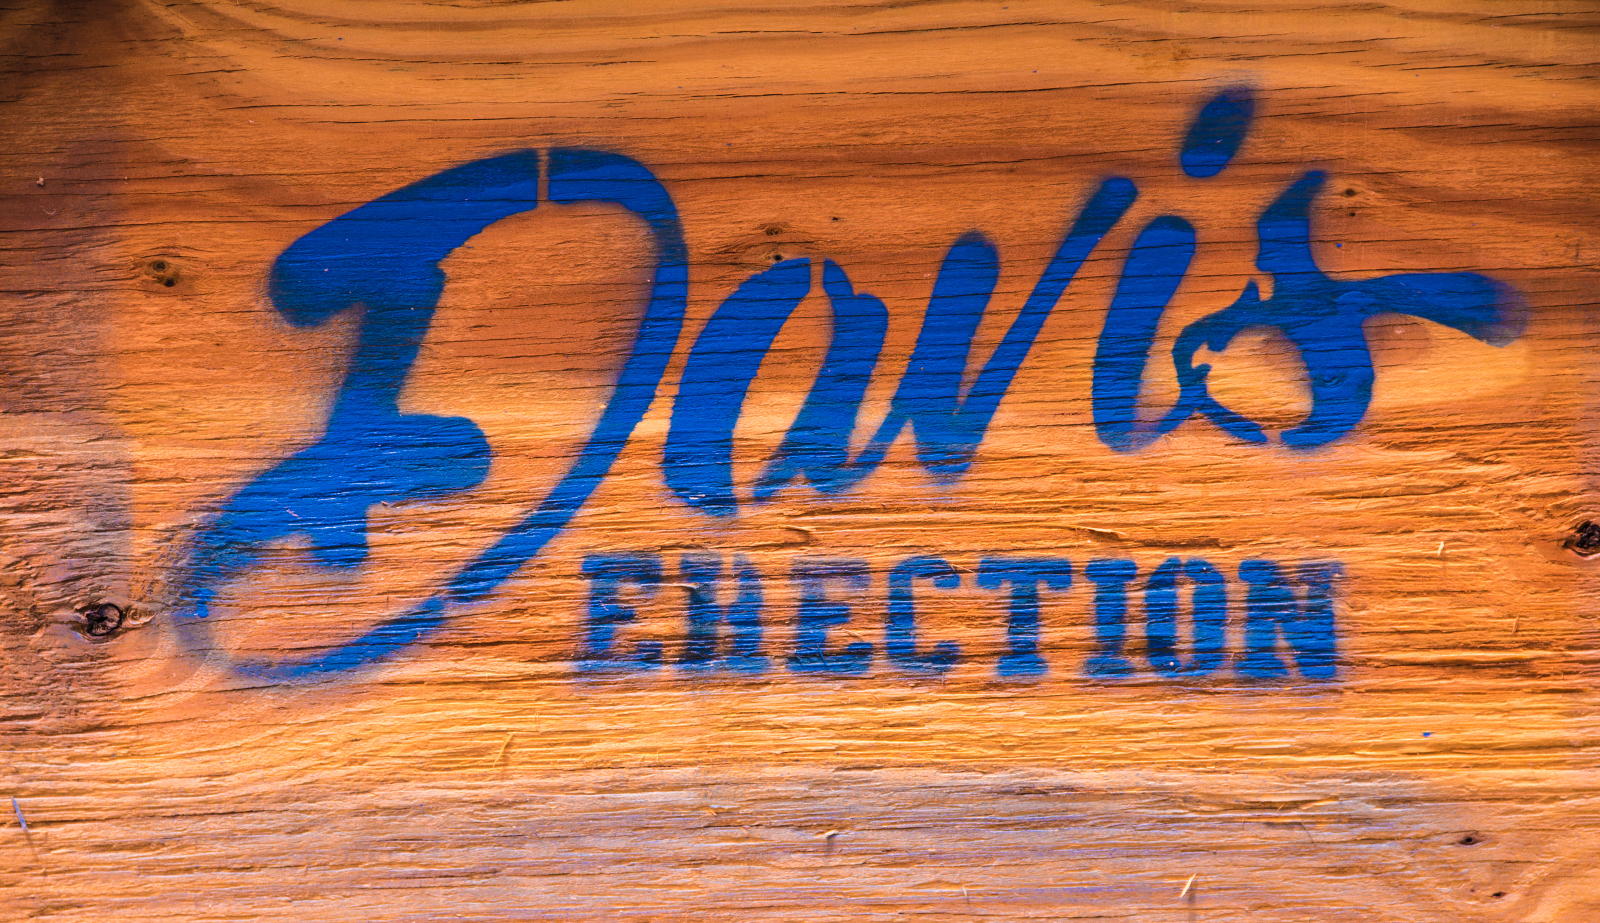 Davis Erection